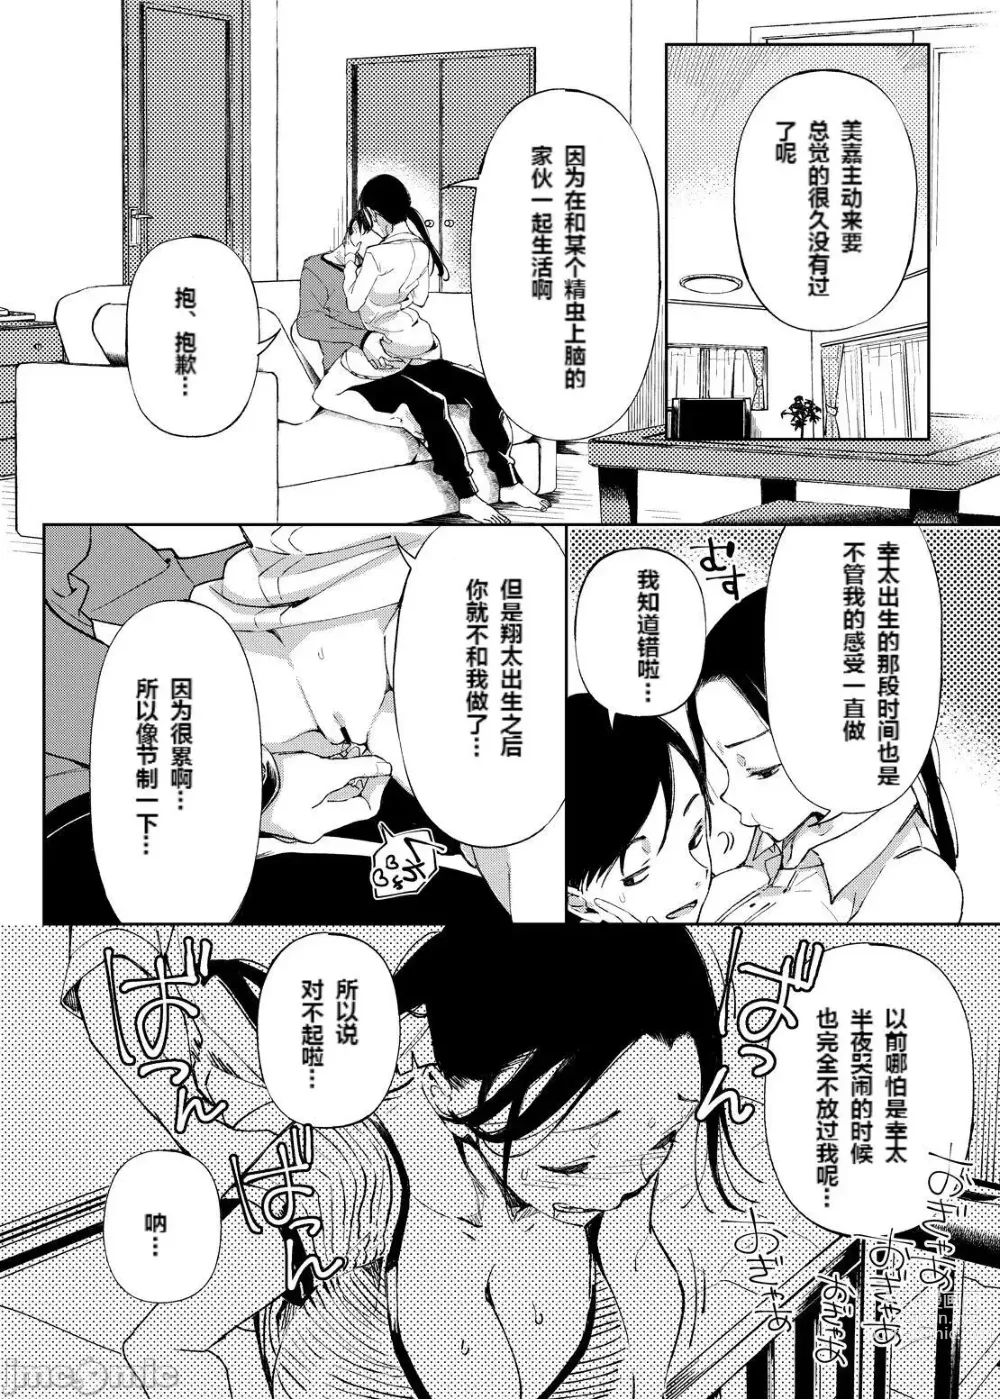 Page 156 of manga Chichi Showtime!